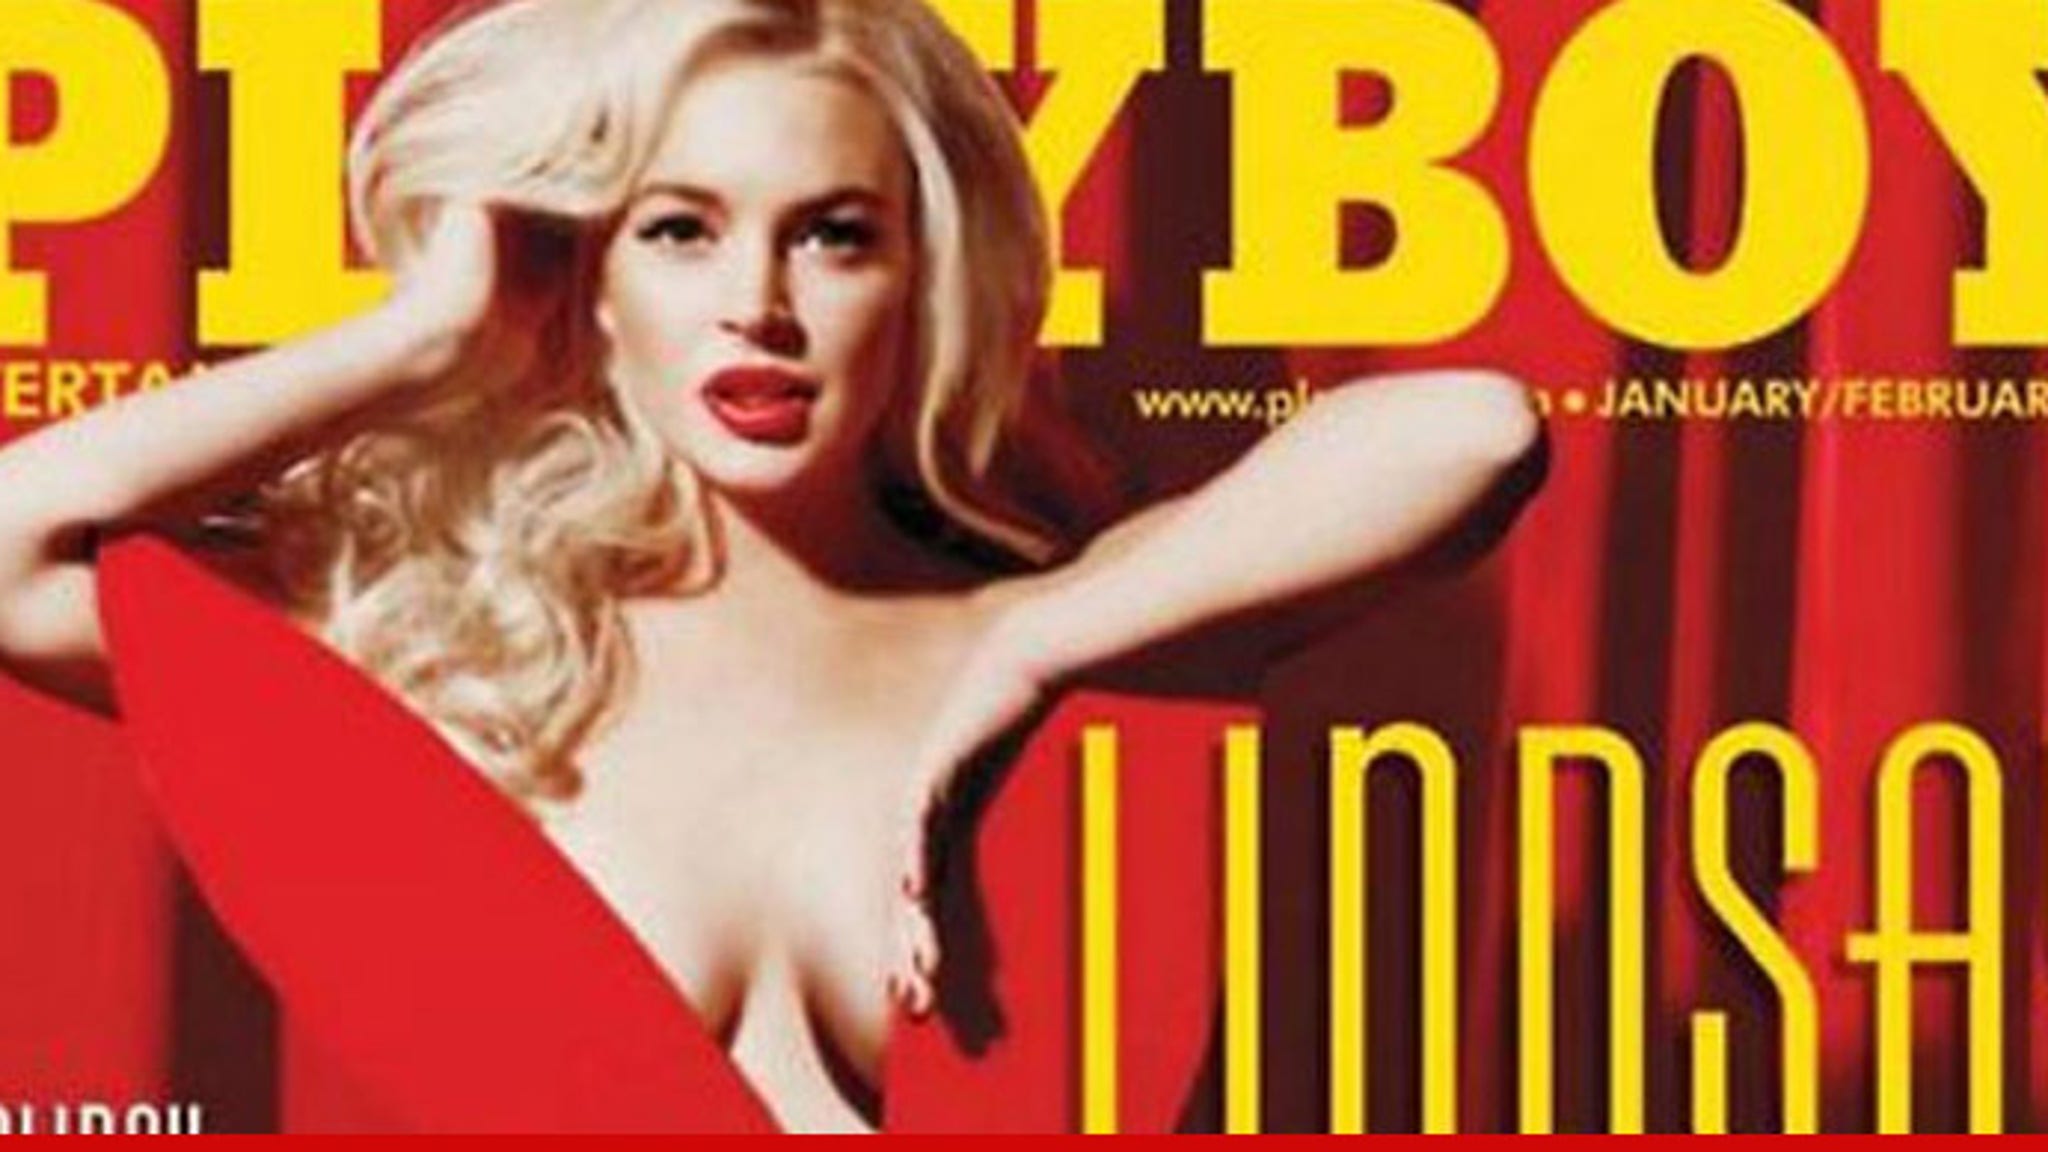 bella dee recommends Lindsay Nicole Playboy